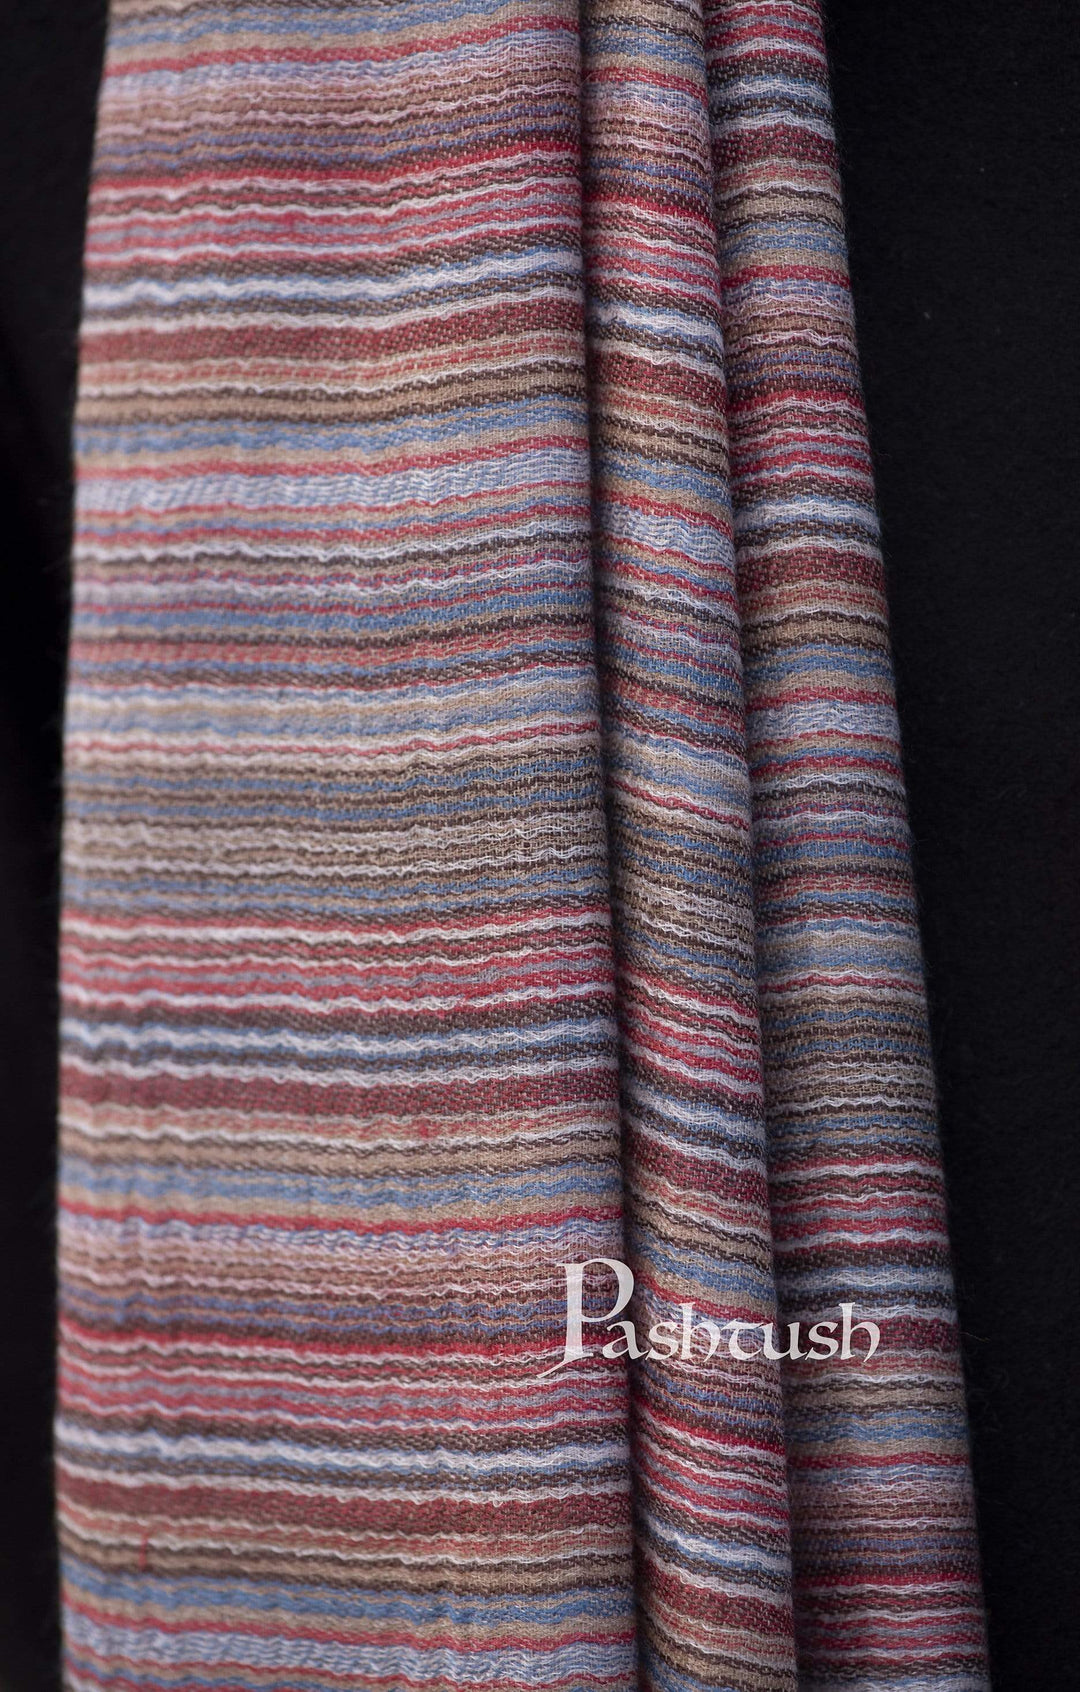 Pashtush India 70x200 Pashtush Mens Cashmere - Wool, Reversible Muffler, Greyed Hues